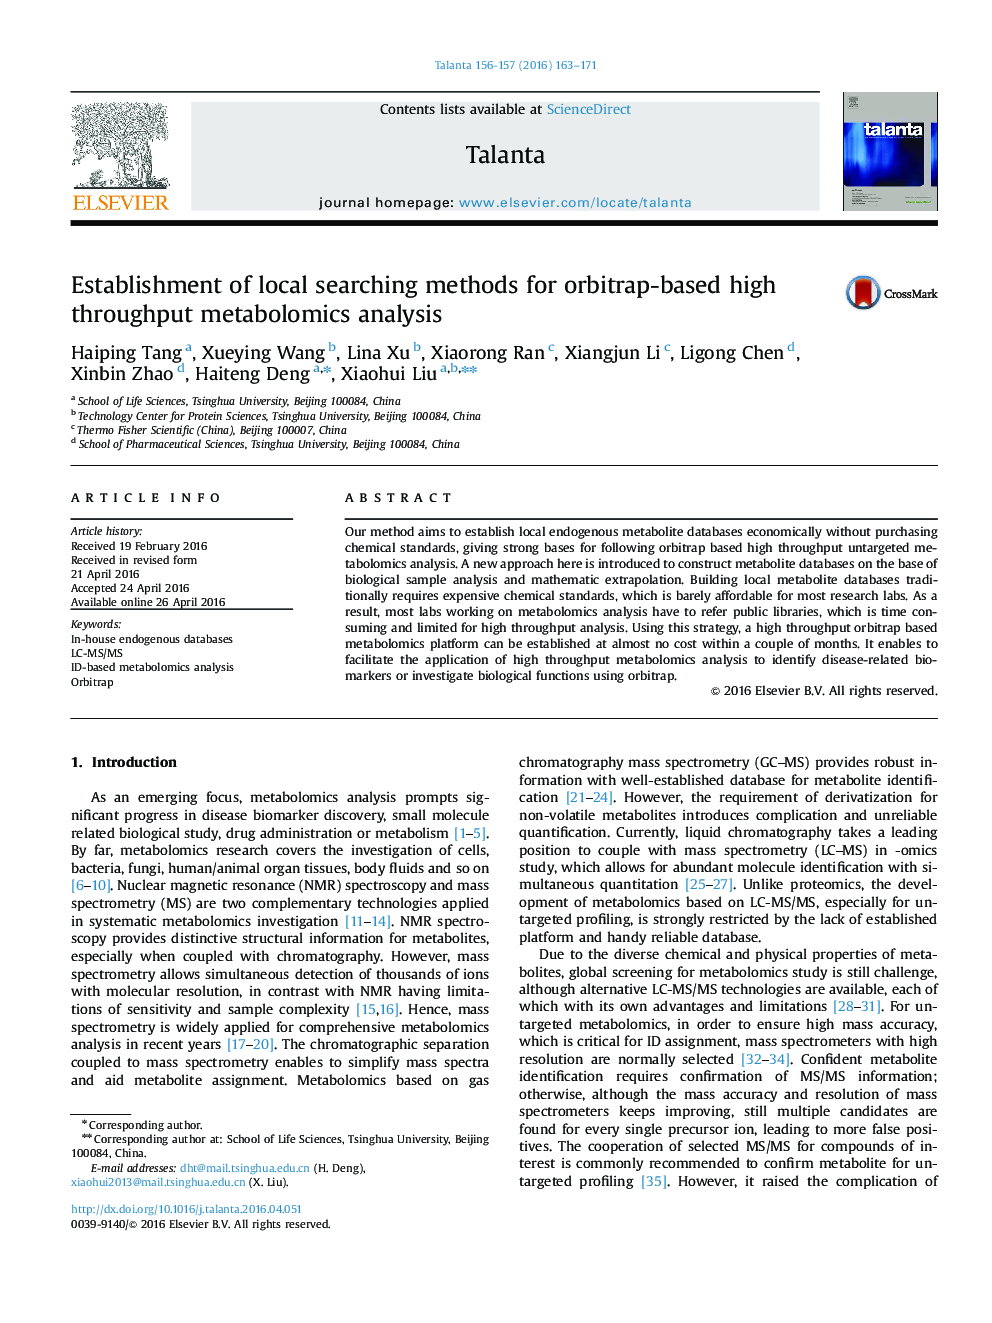 Establishment of local searching methods for orbitrap-based high throughput metabolomics analysis